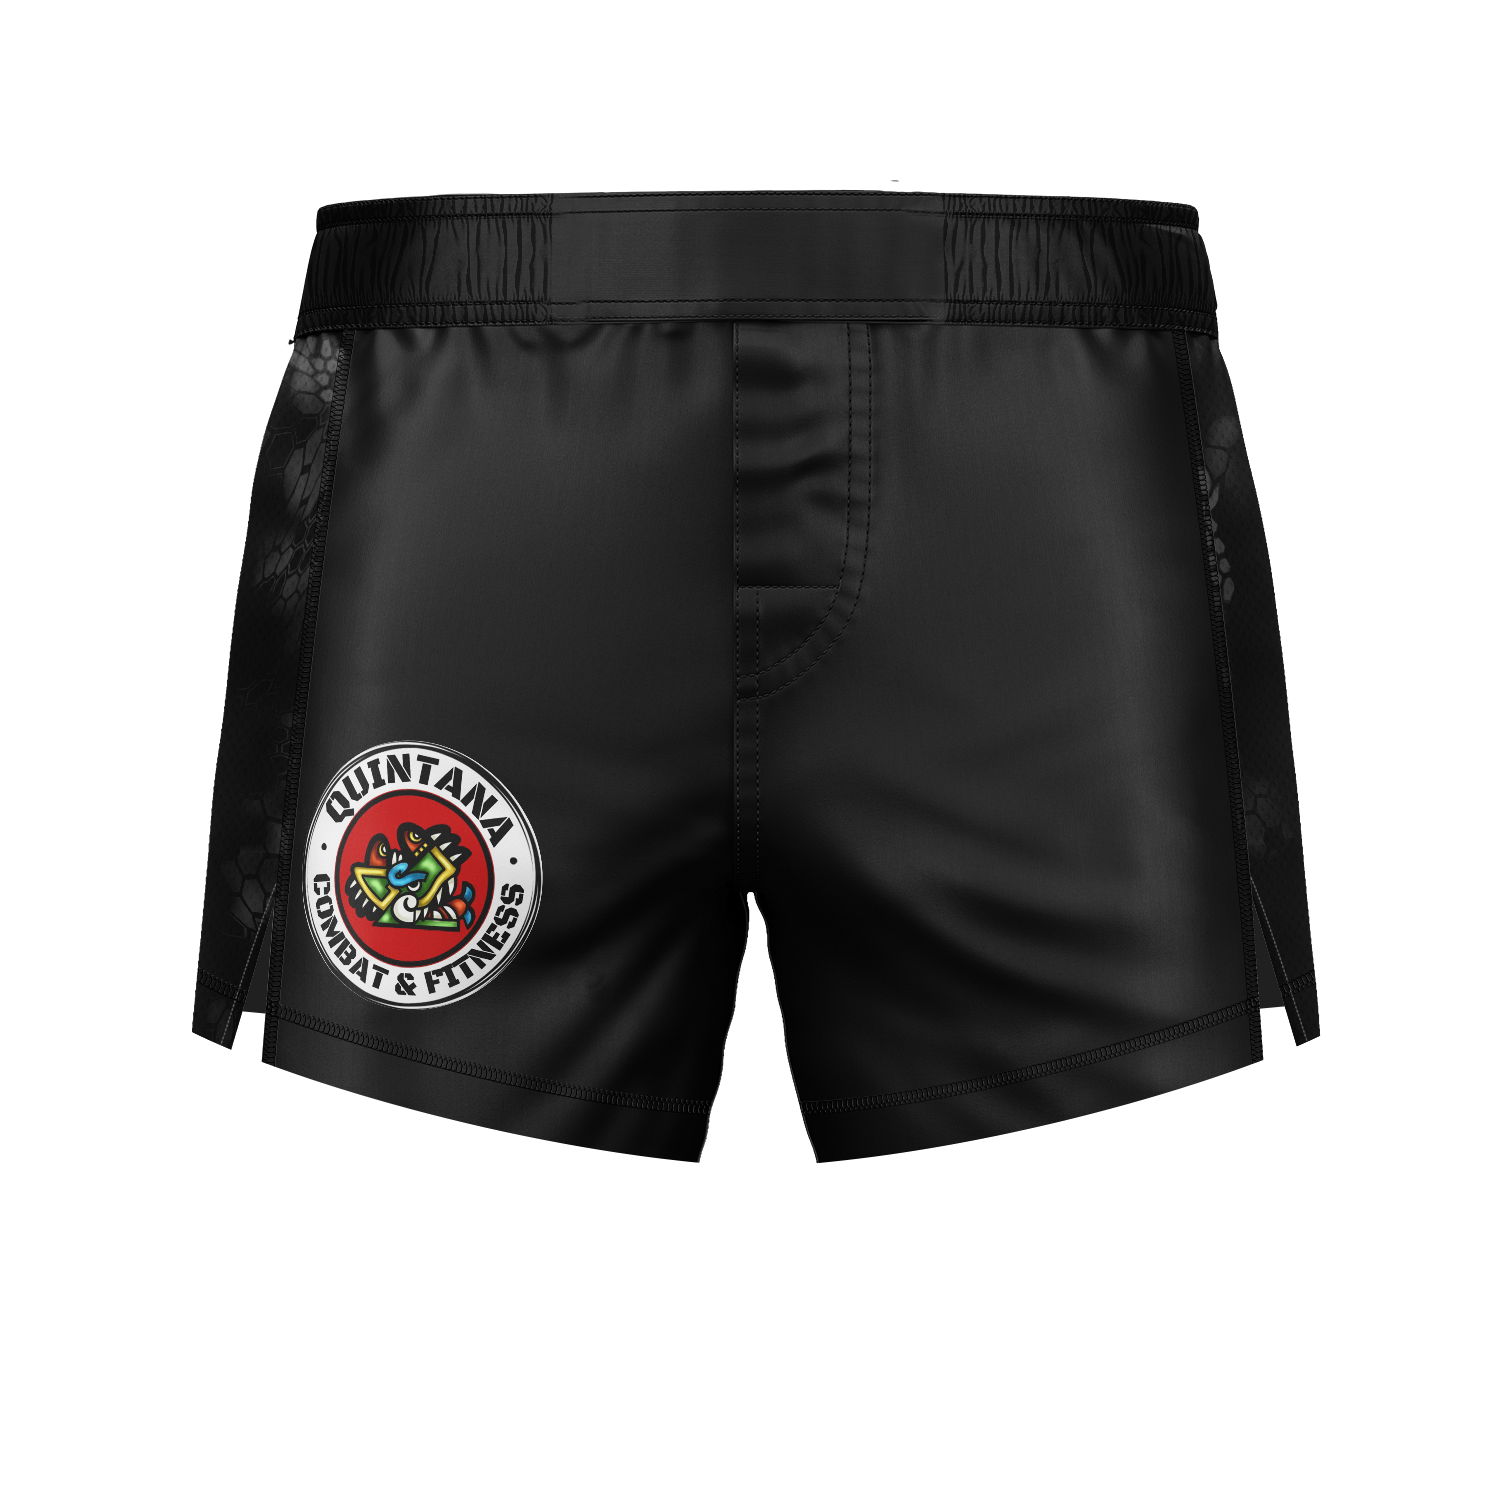 Quintana Combat & Fitness men's fight shorts, black